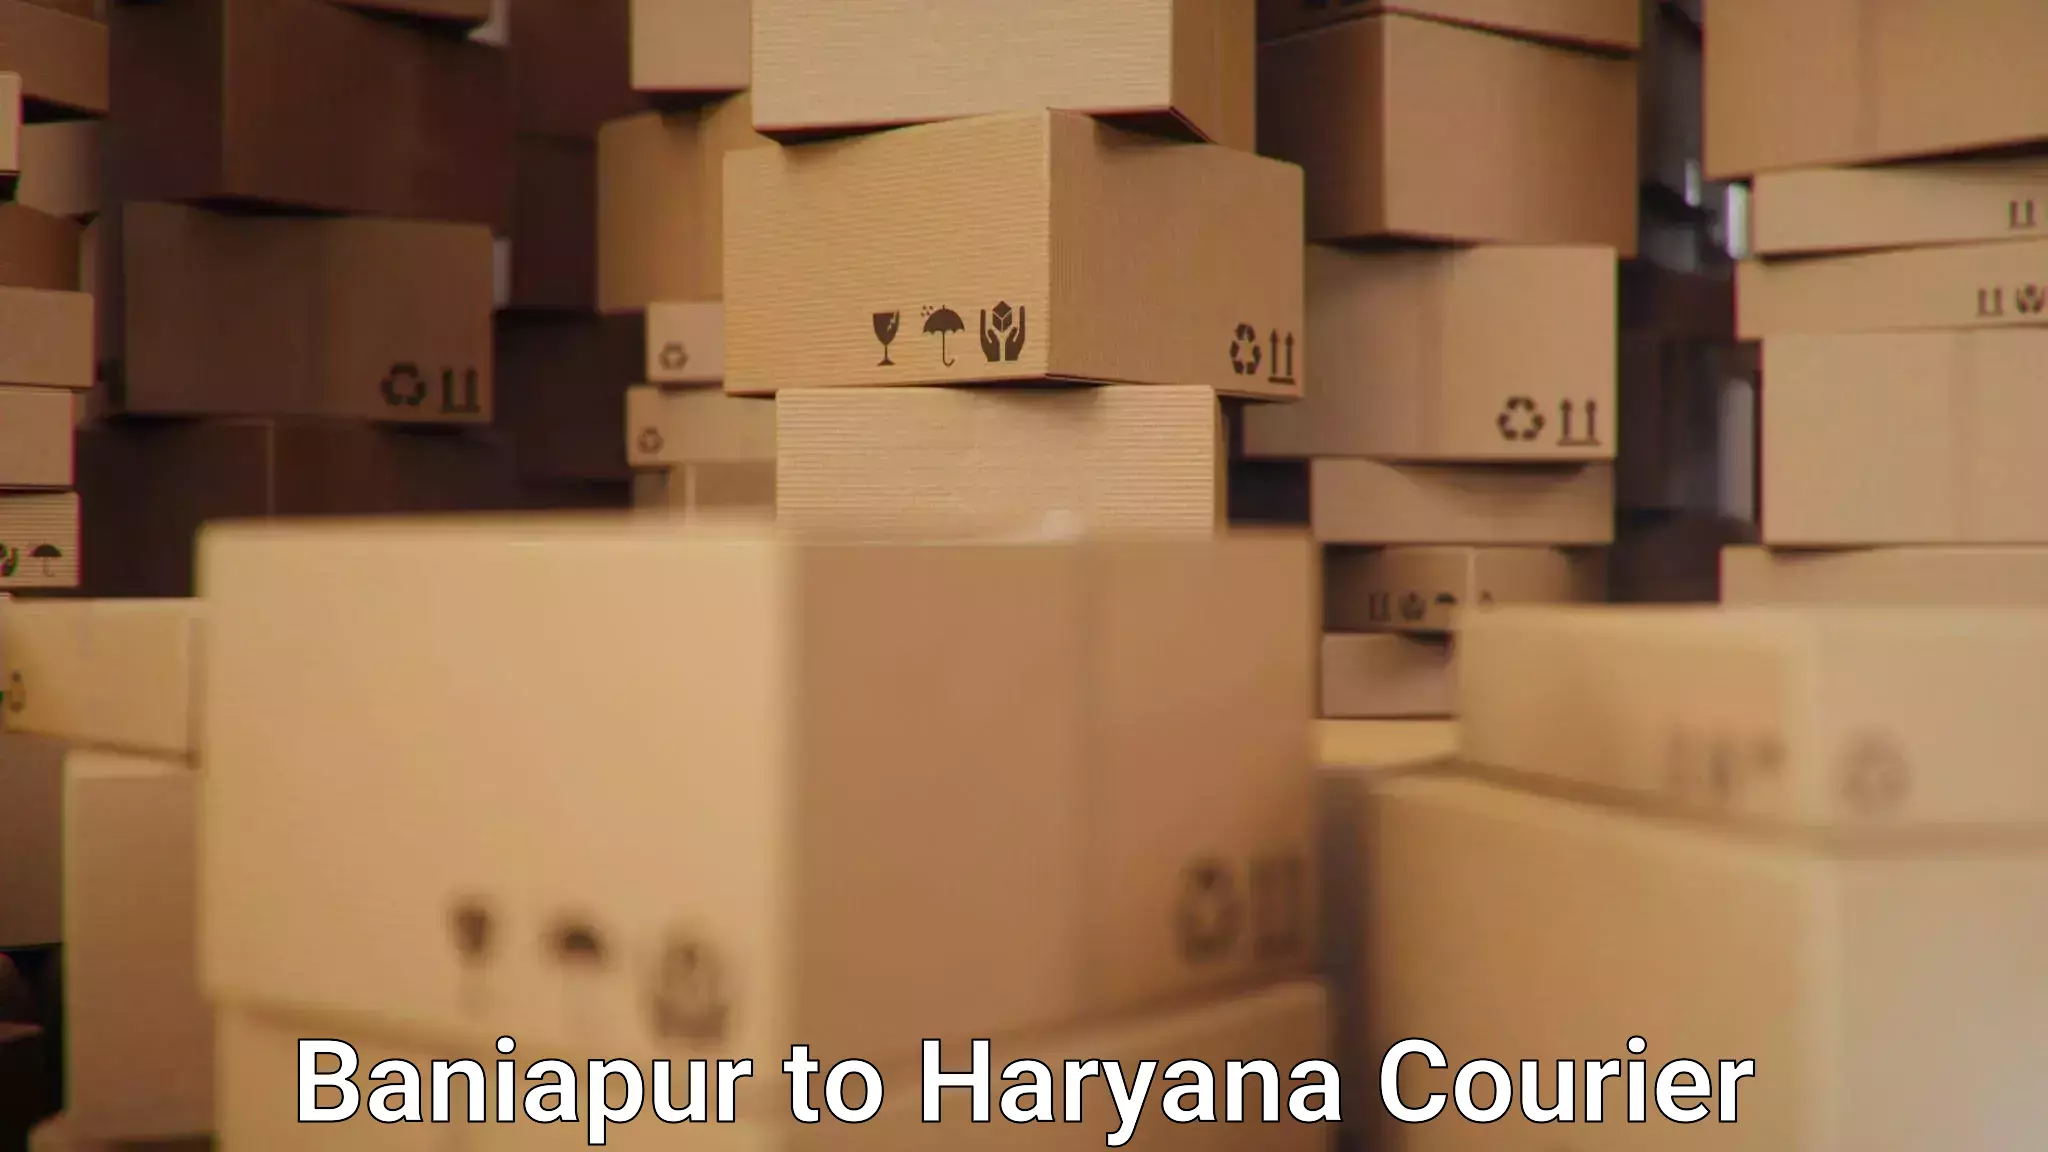 Courier app Baniapur to Haryana